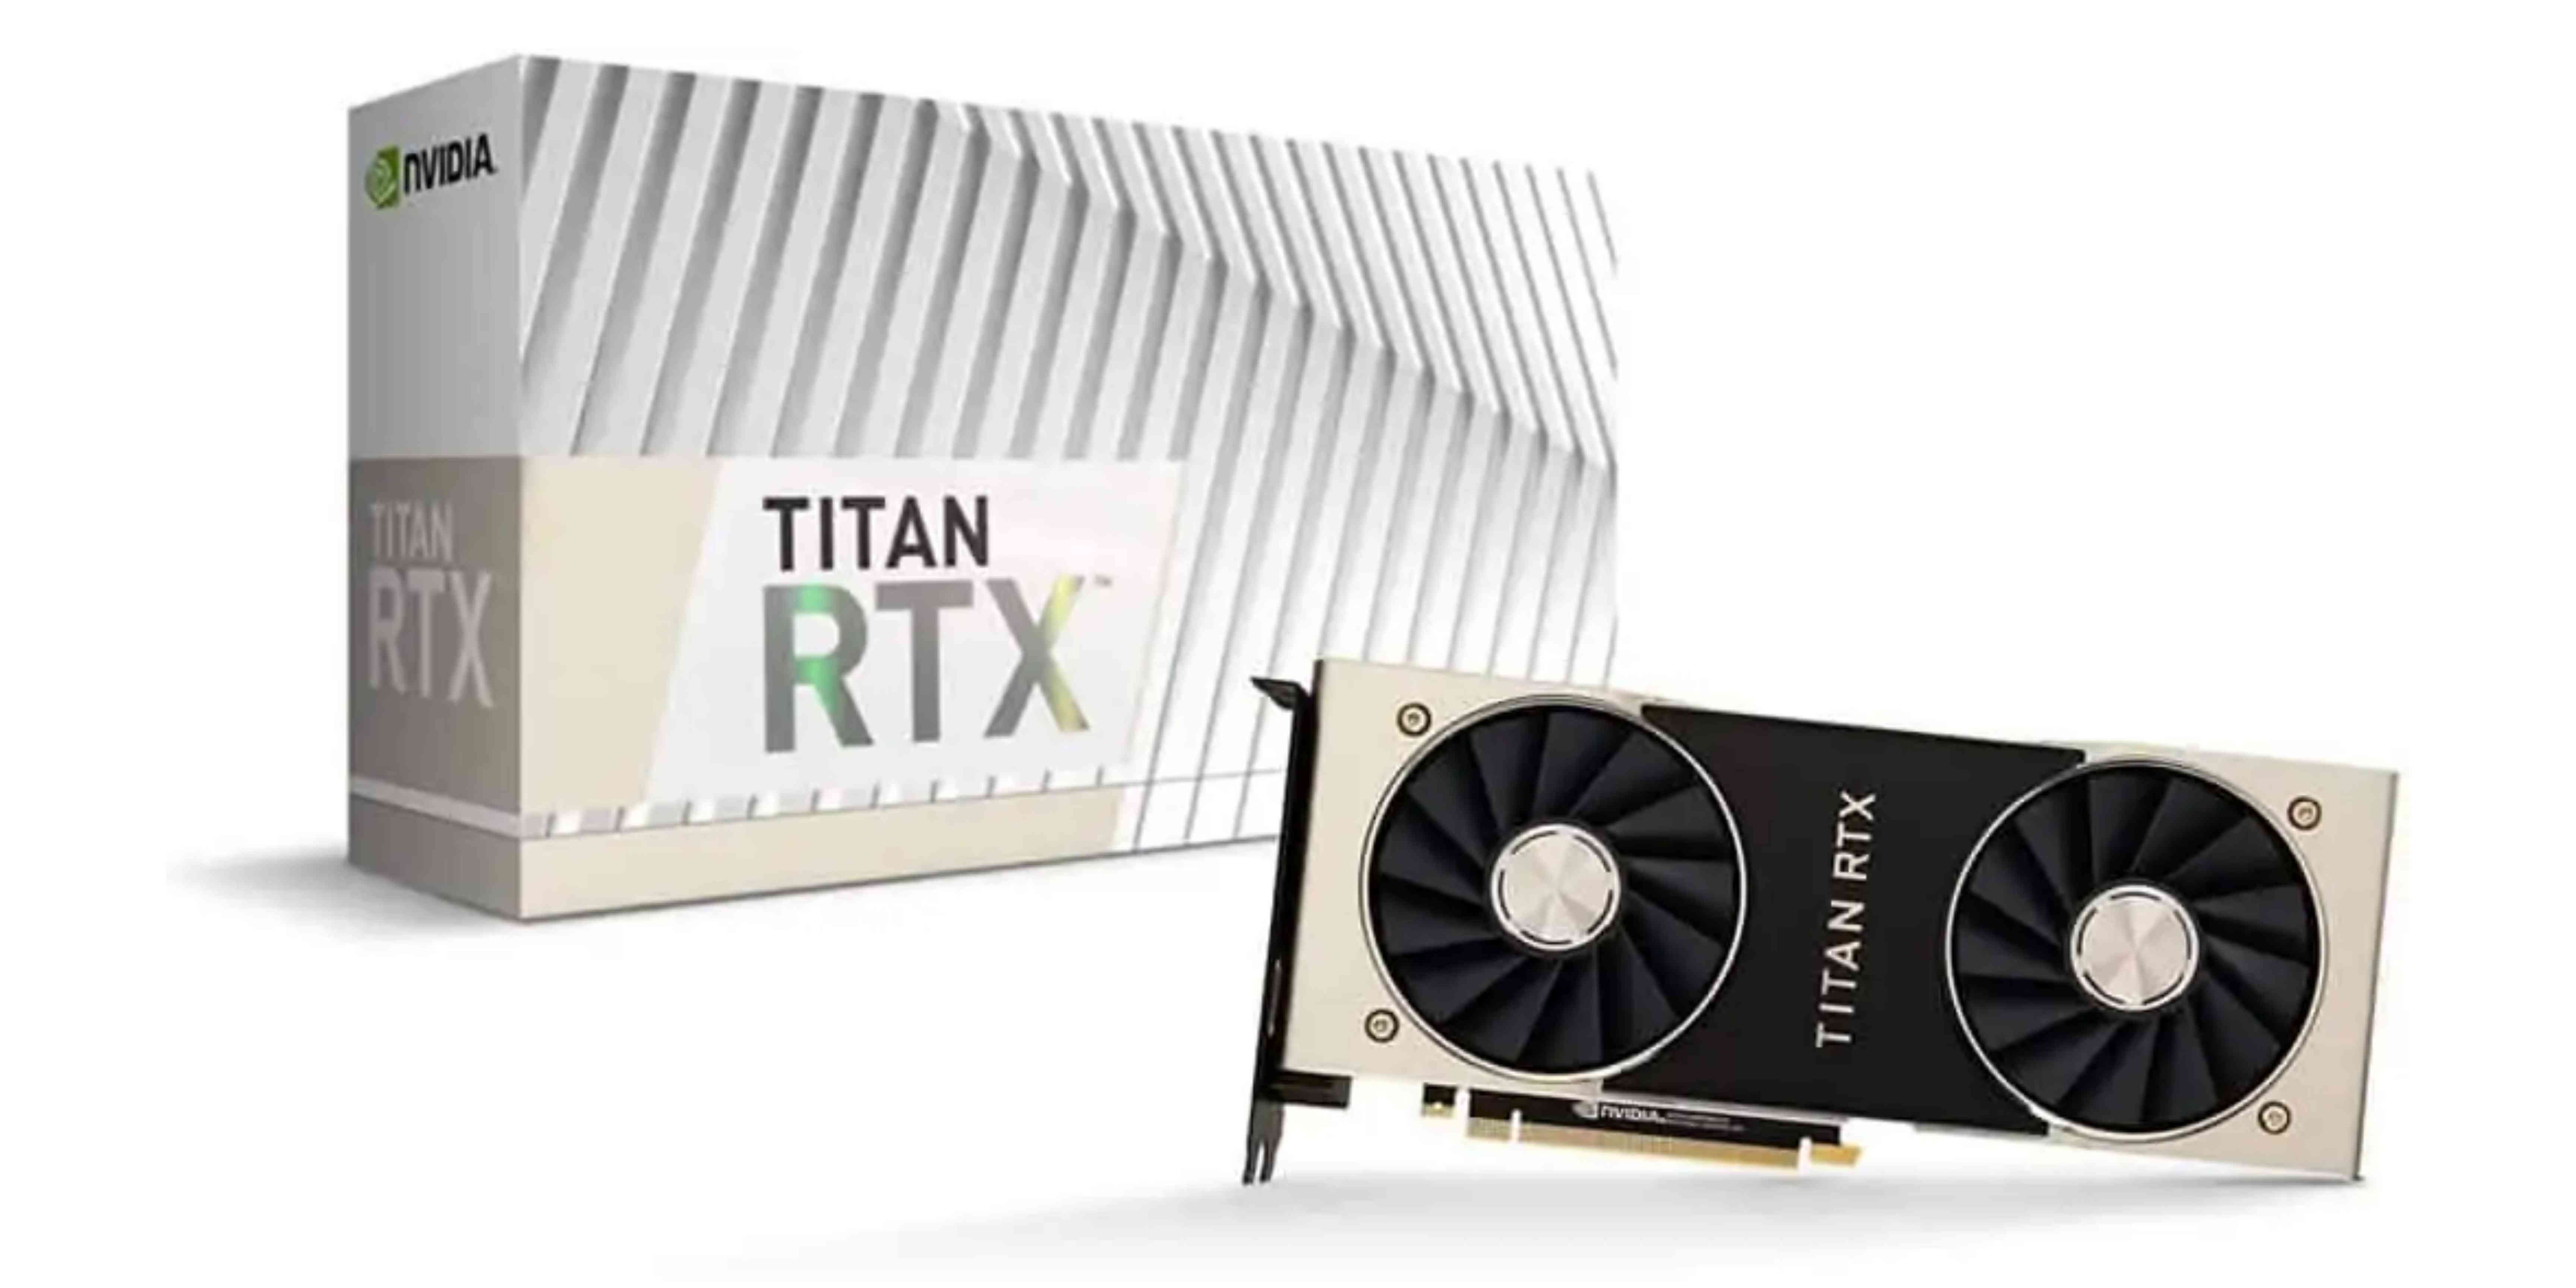 NVIDIA Titan RTX 24GB, a crypto mining equipment